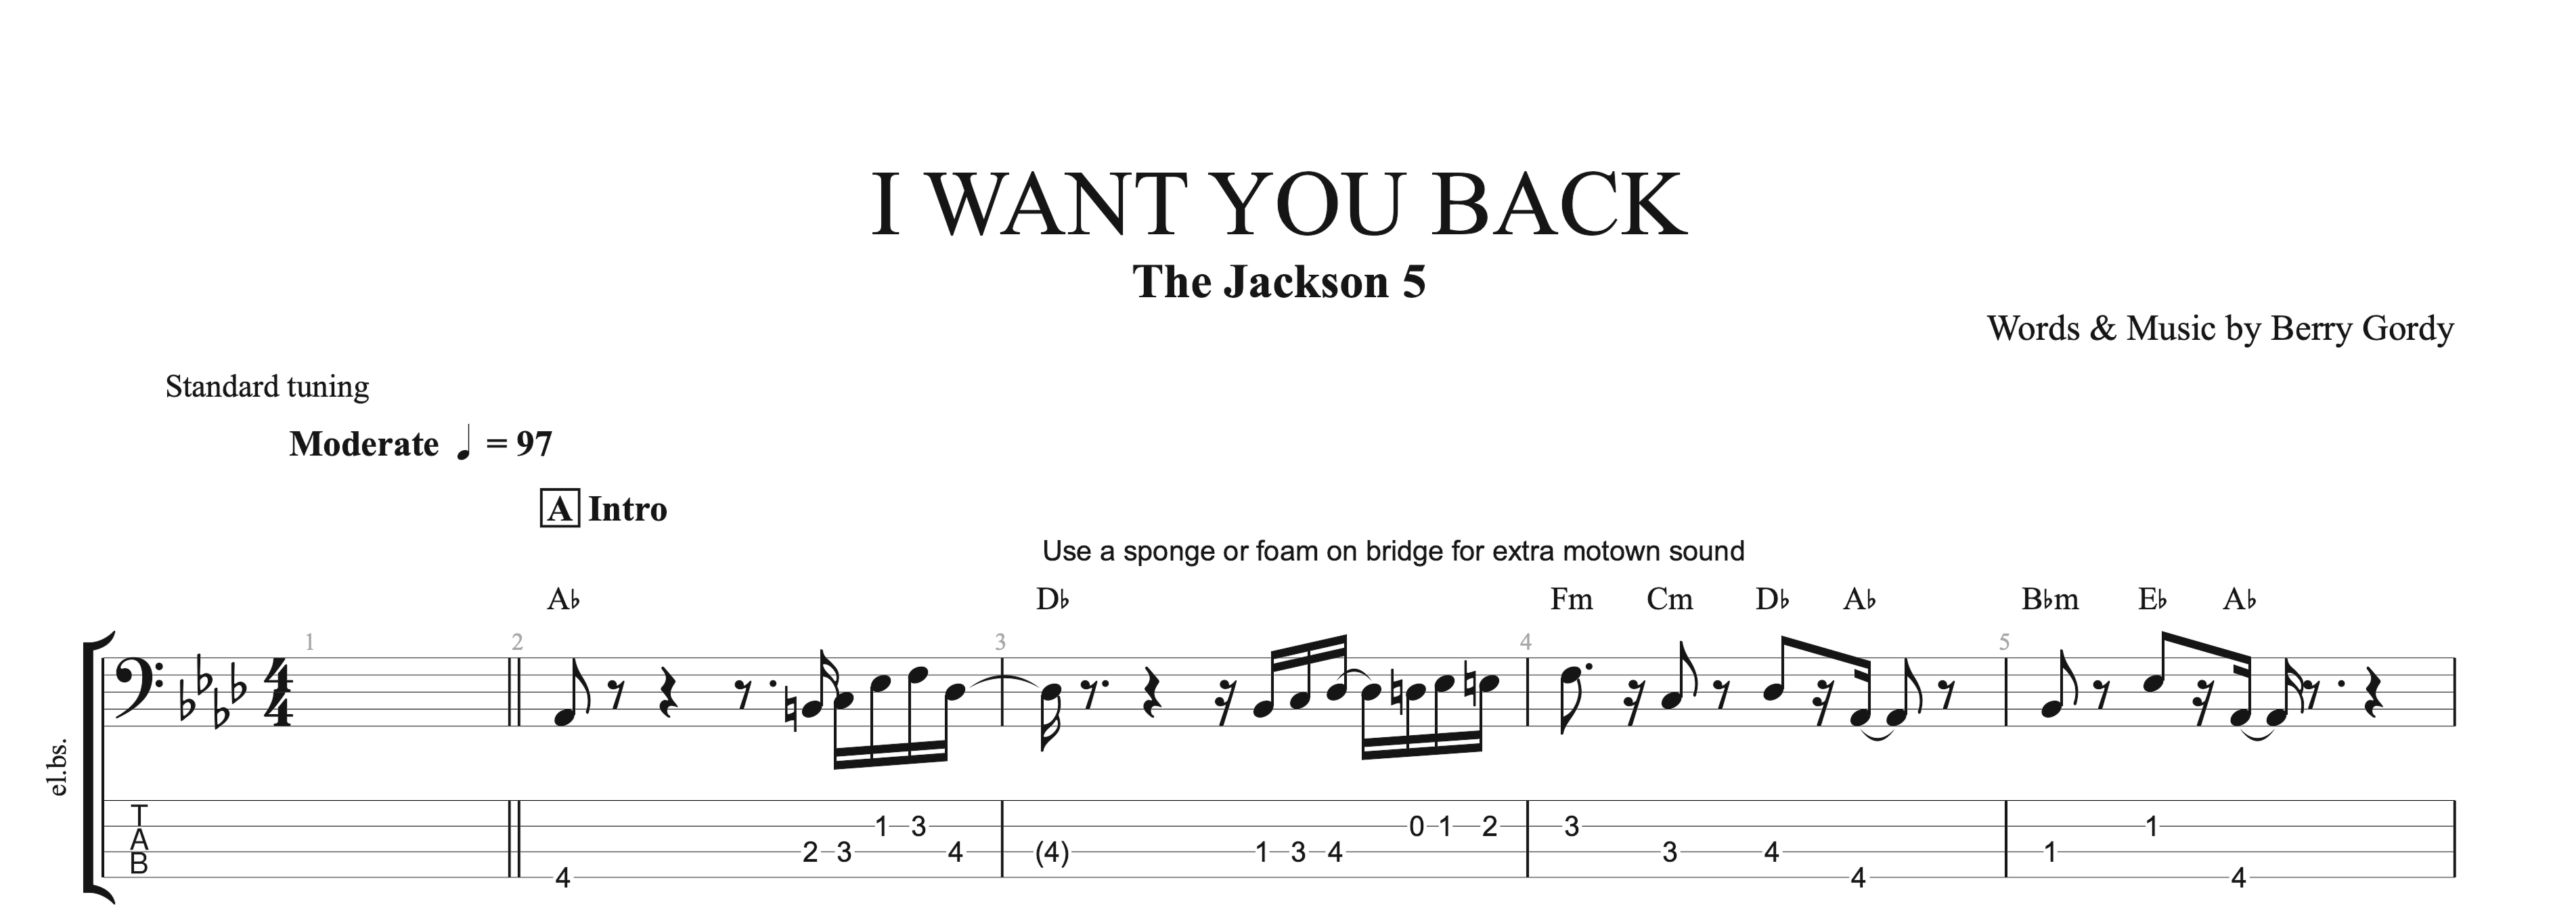 Free Tab Play Jackson Five S Funkiest Bassline Guitar Pro Blog Arobas Musicguitar Pro Blog Arobas Music